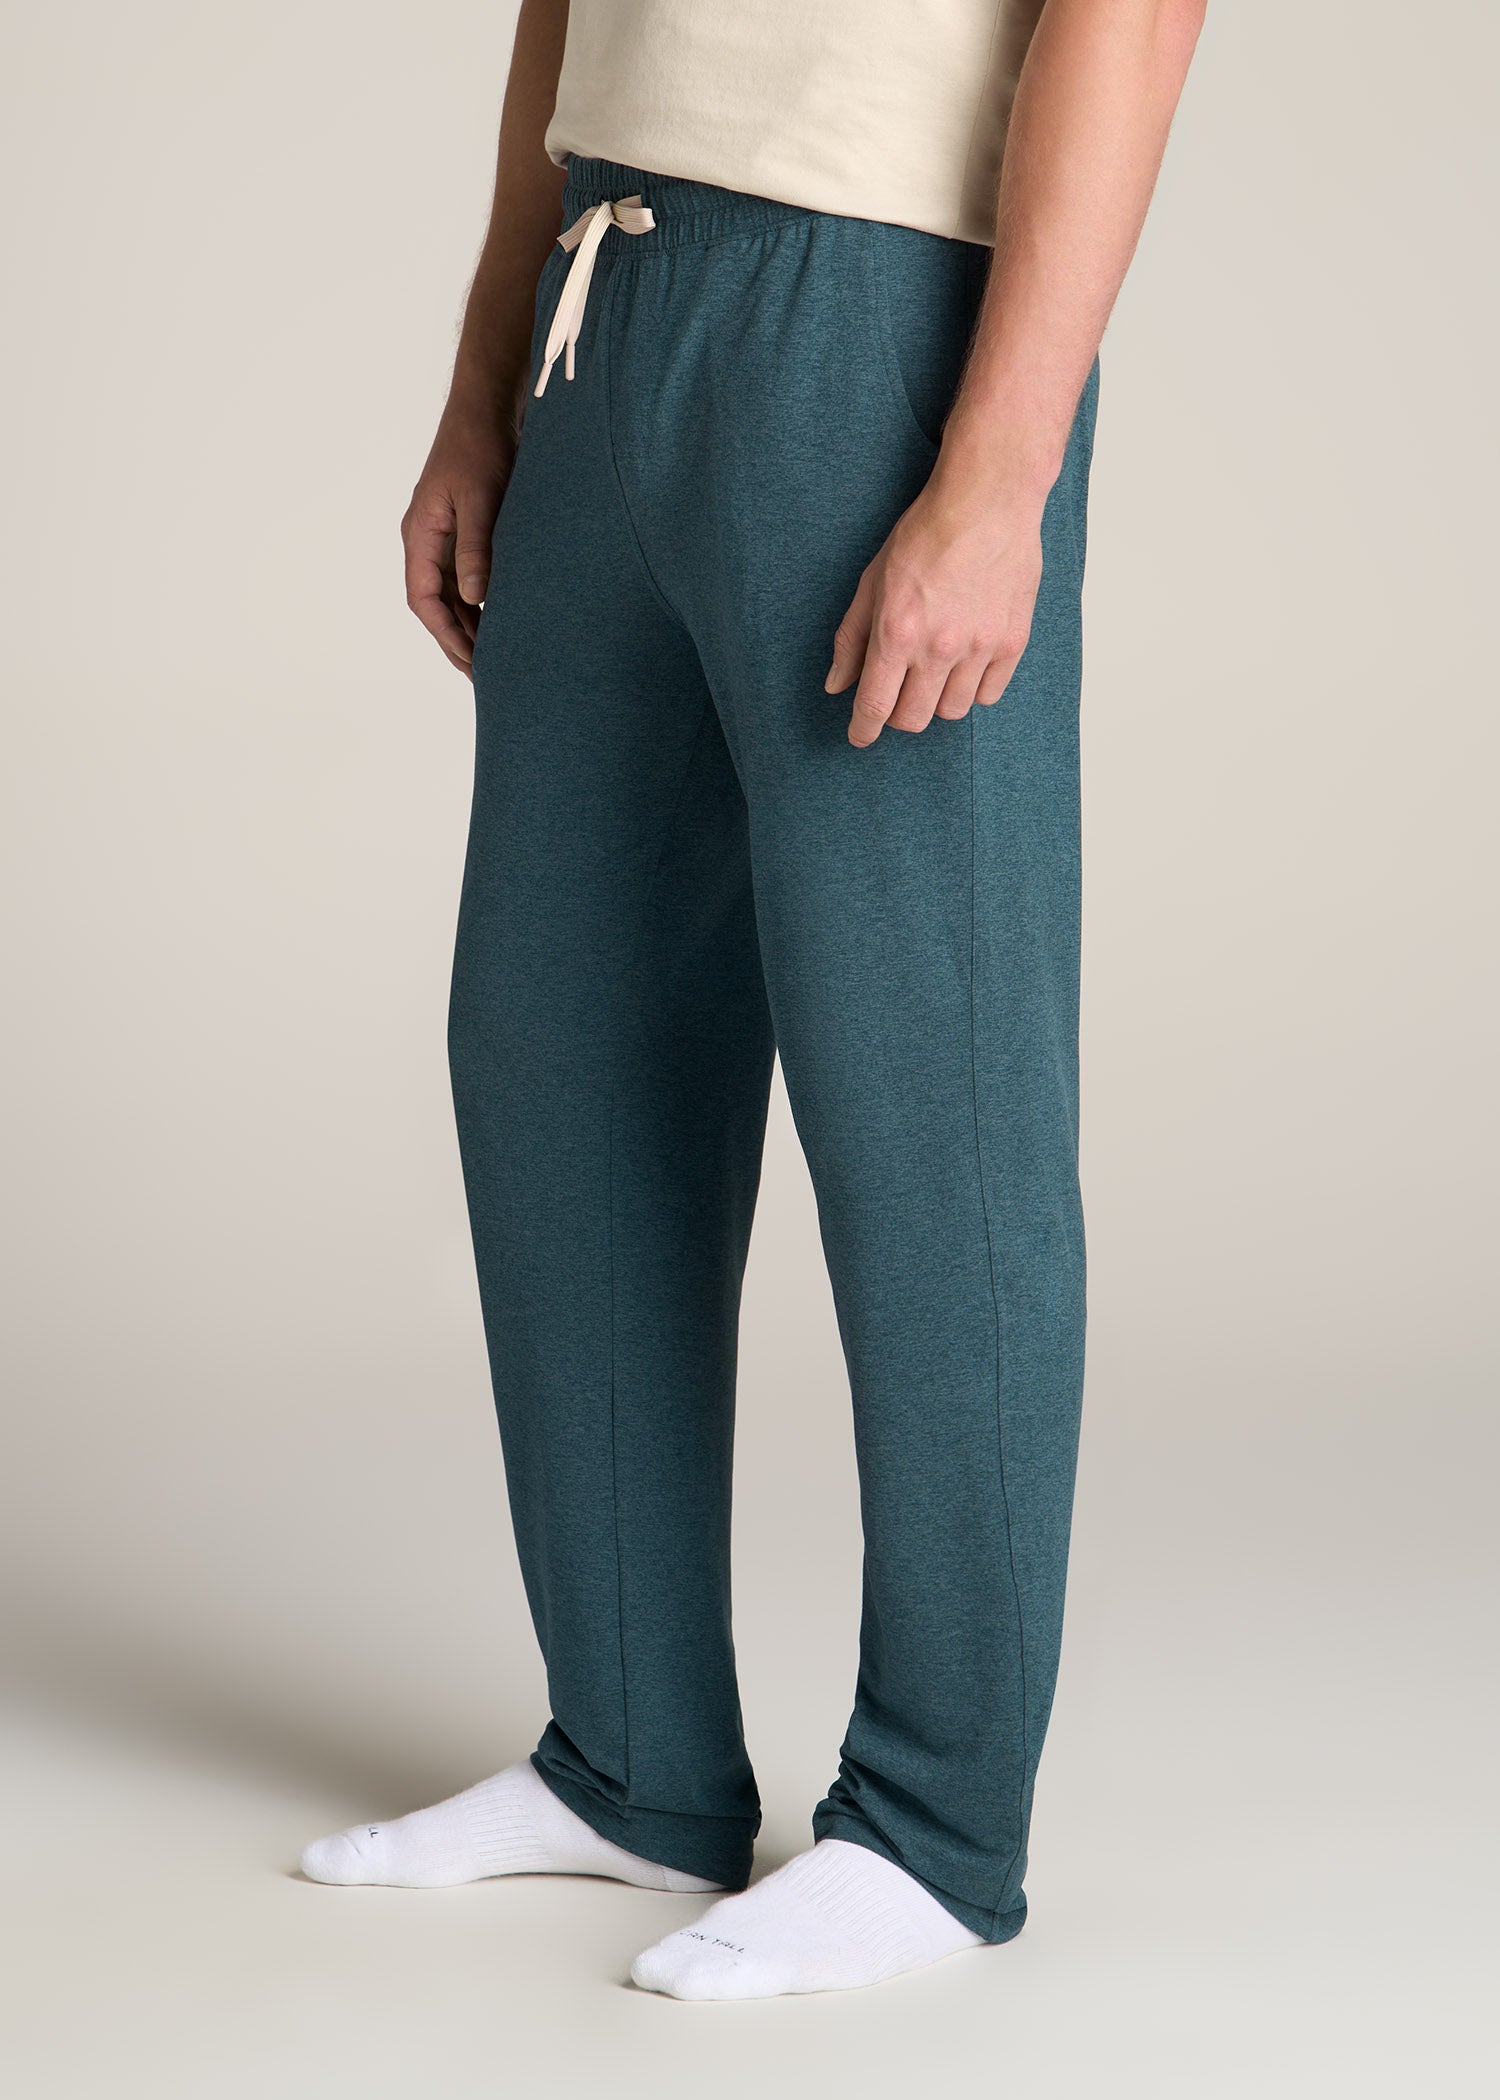 Vintage Elastic Waist Pants - Size 32-36